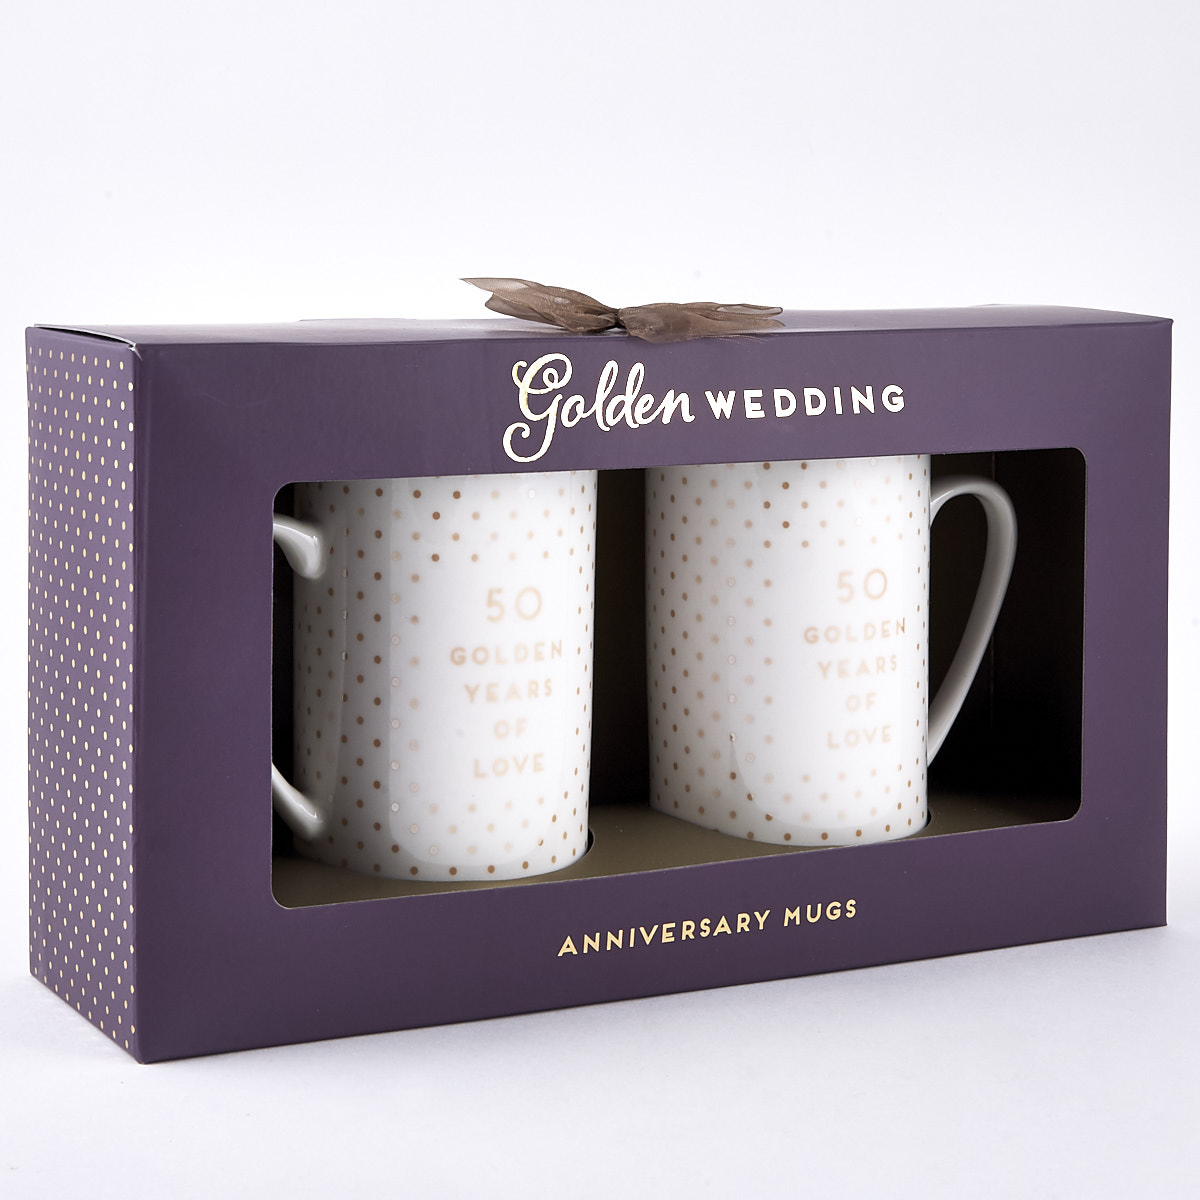 Golden Wedding 50th Anniversary Mugs